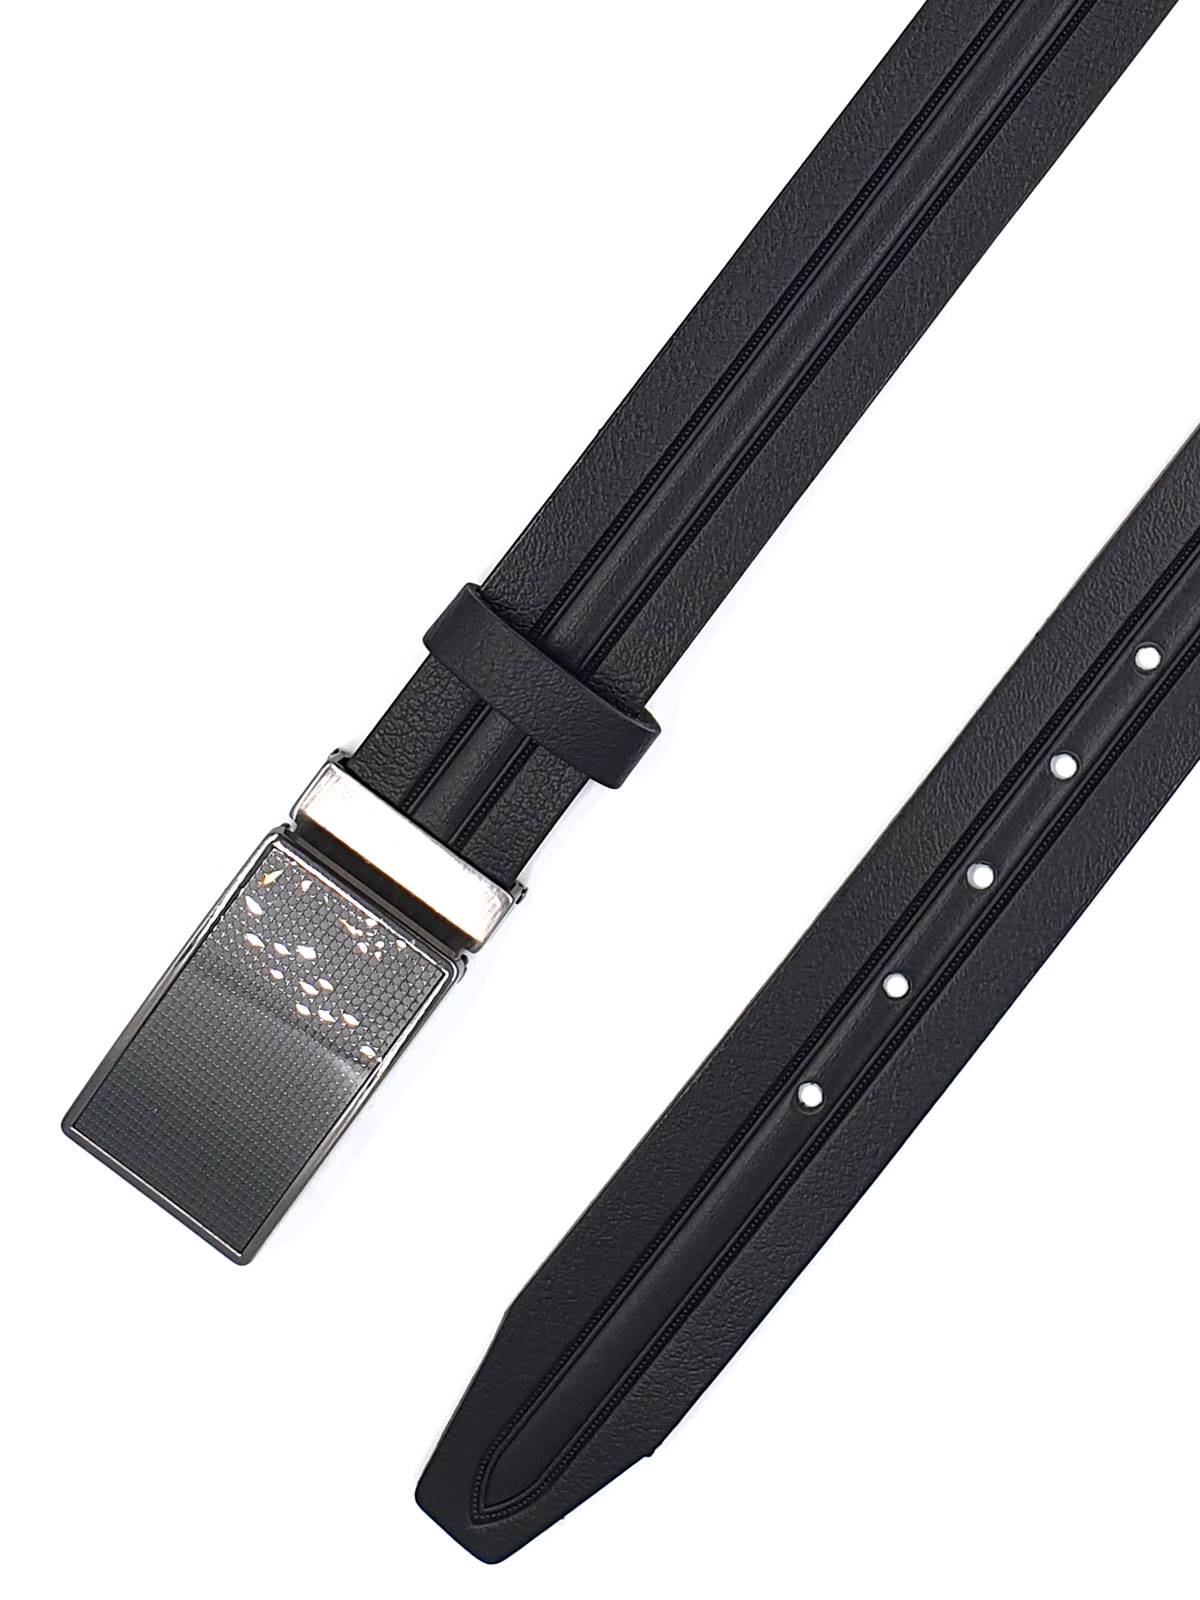 Belt in black with metal plate - 10427 - € 24.75 img3